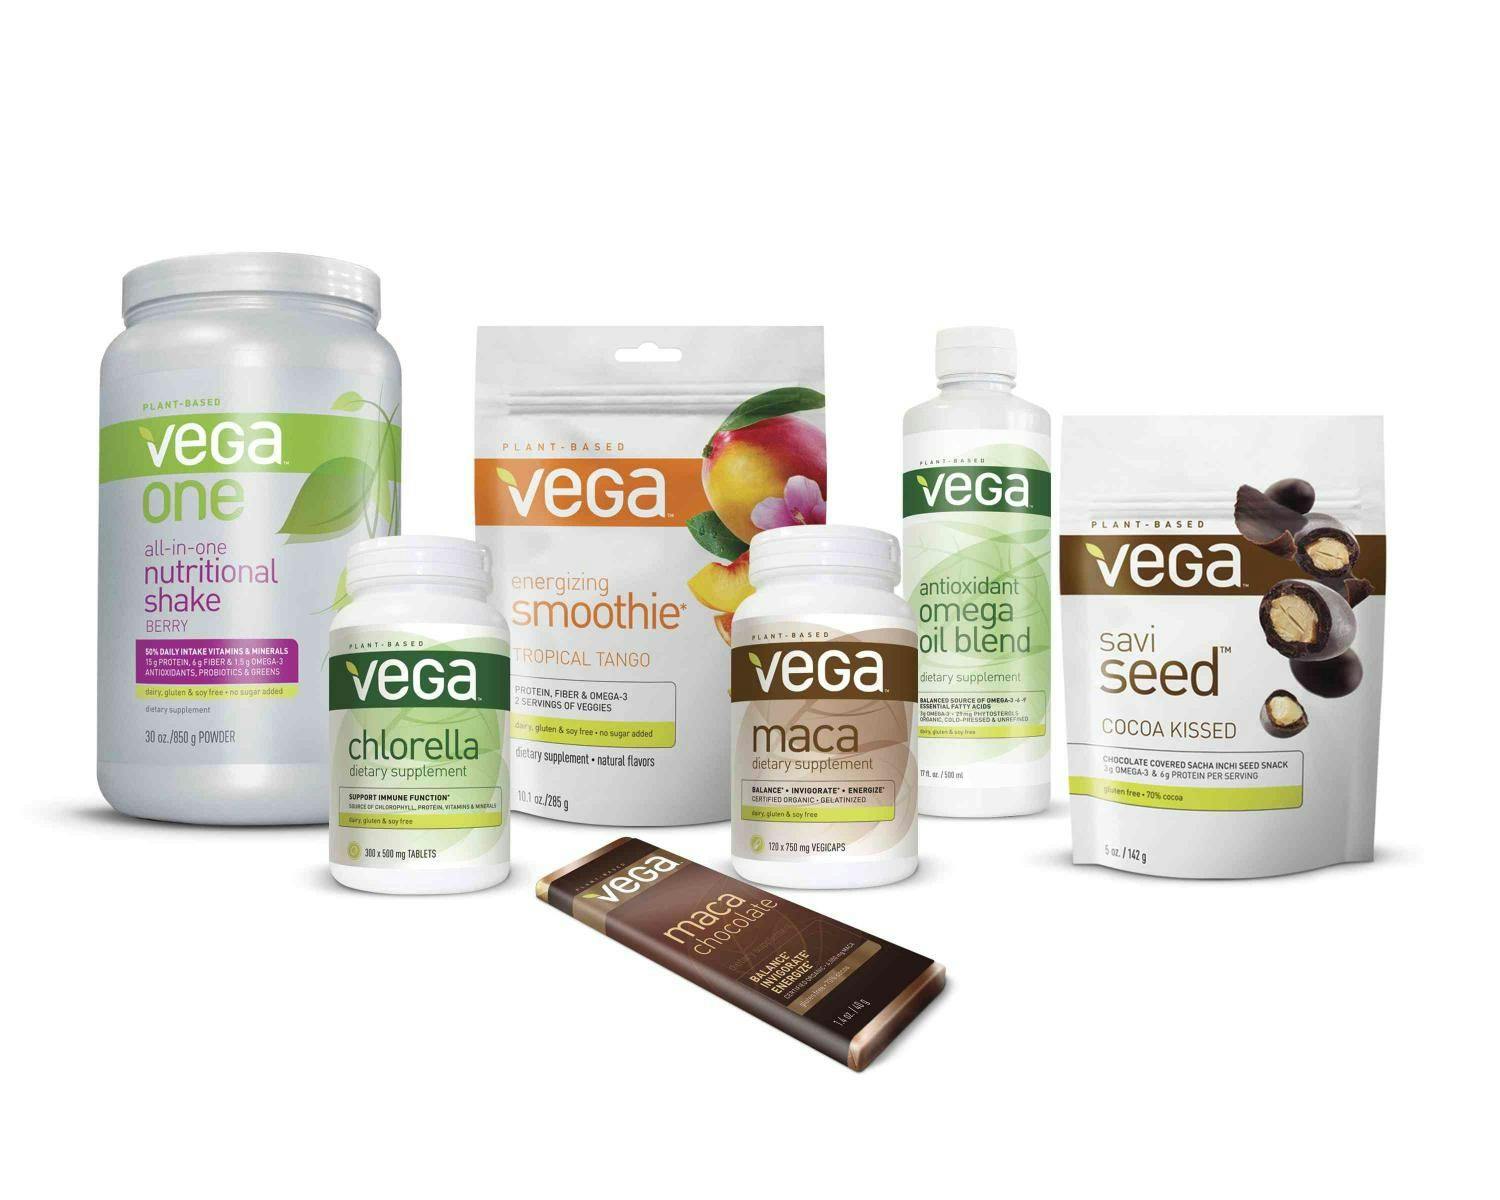 Best of 2012 Retail Product/Brand: Vega